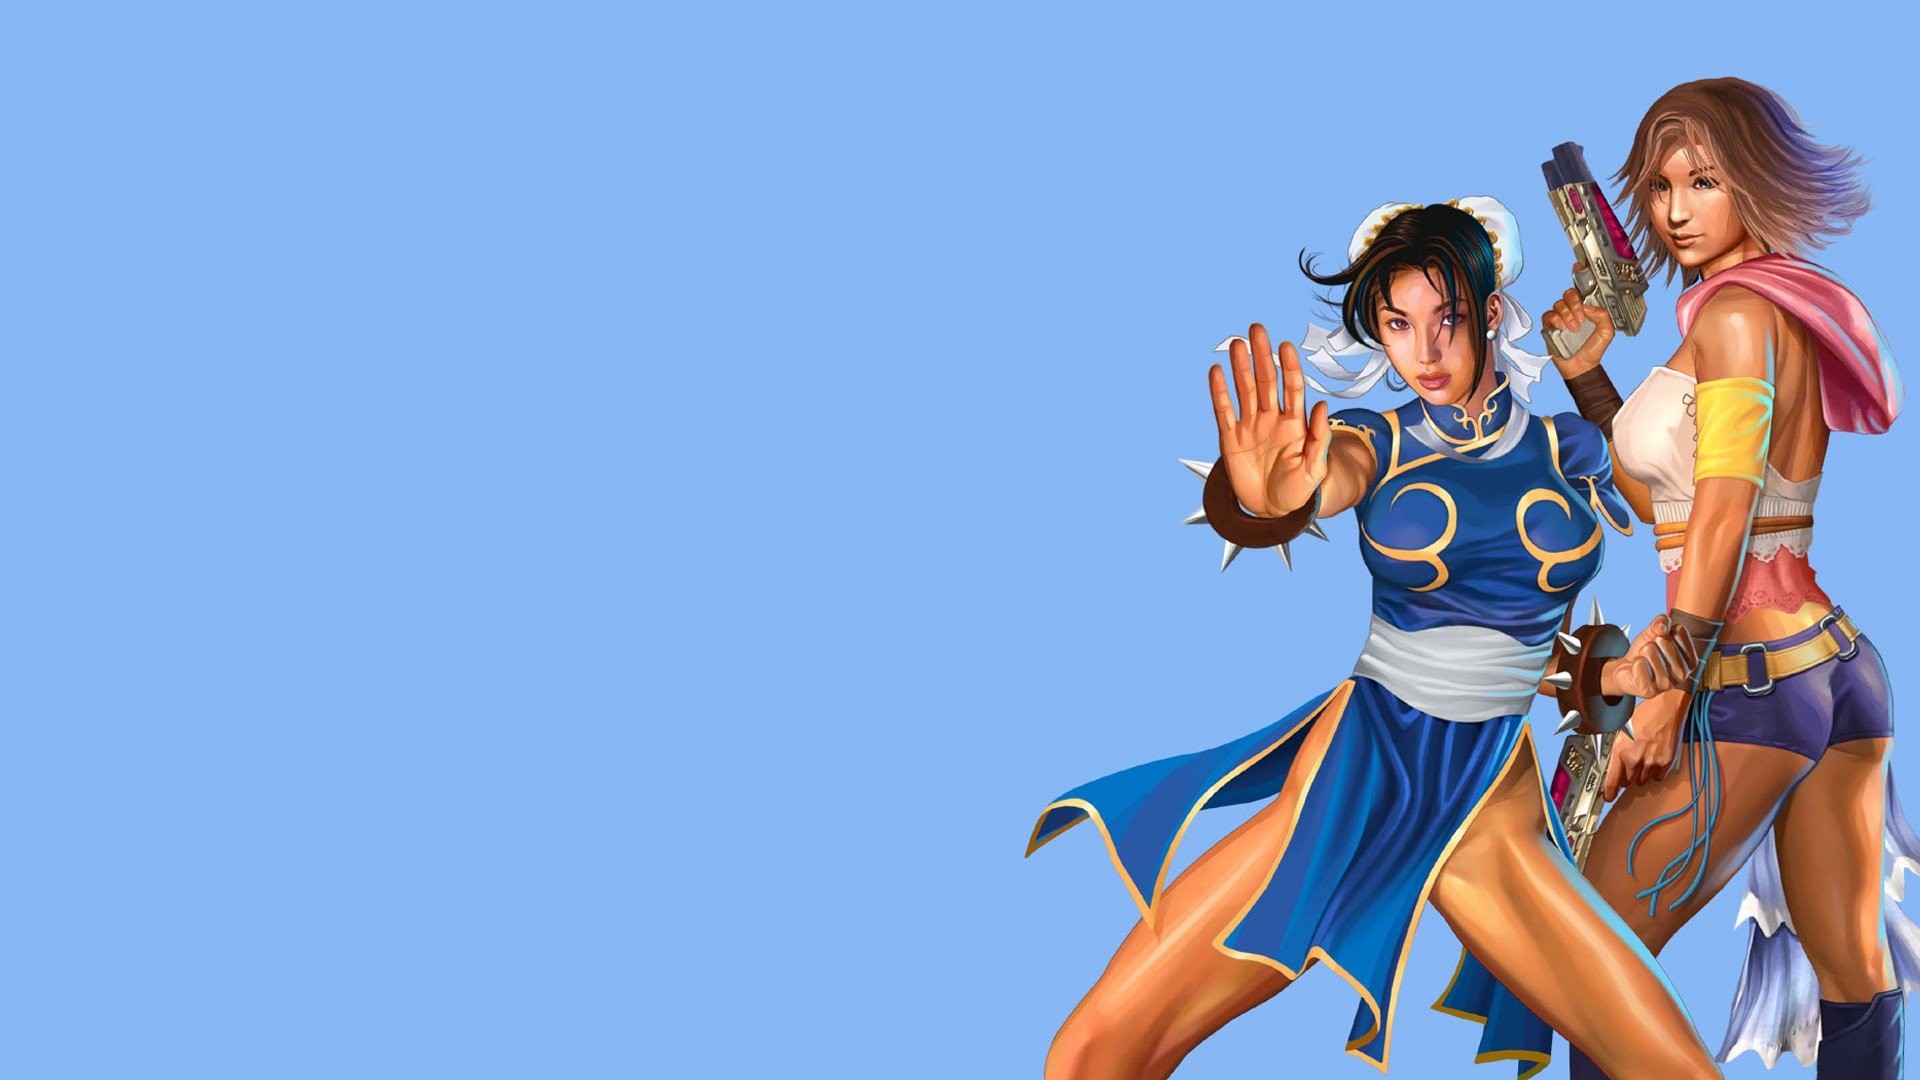 1920x1080 Chun Li, Yuna, Street Fighter, Final Fantasy, Illustration, Blue background